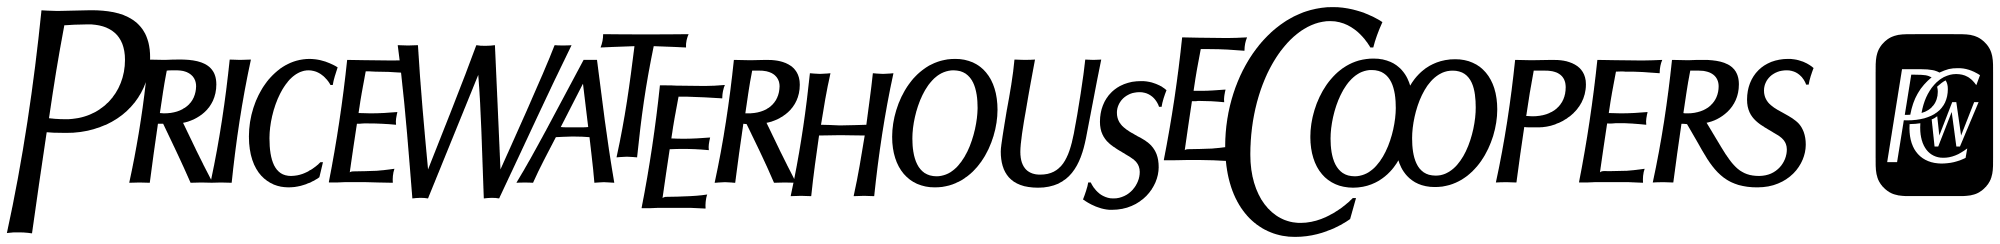 Pricewaterhouse Coopers logo